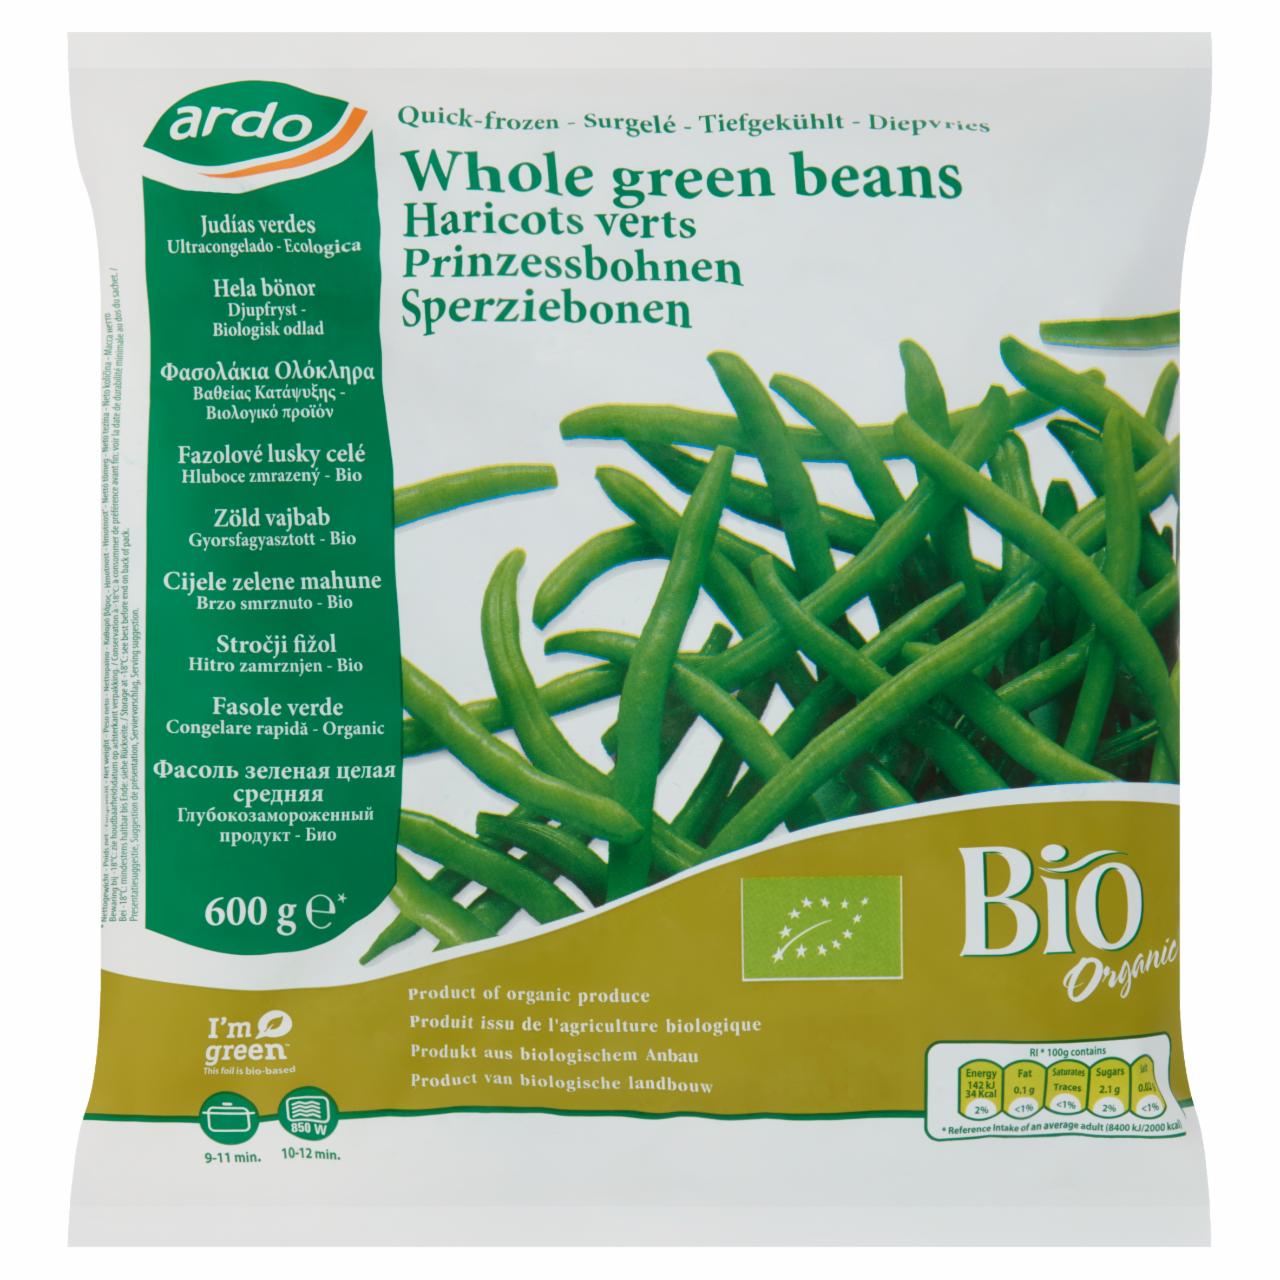 Photo - Ardo Organic Quick-Frozen Whole Green Beans 600 g